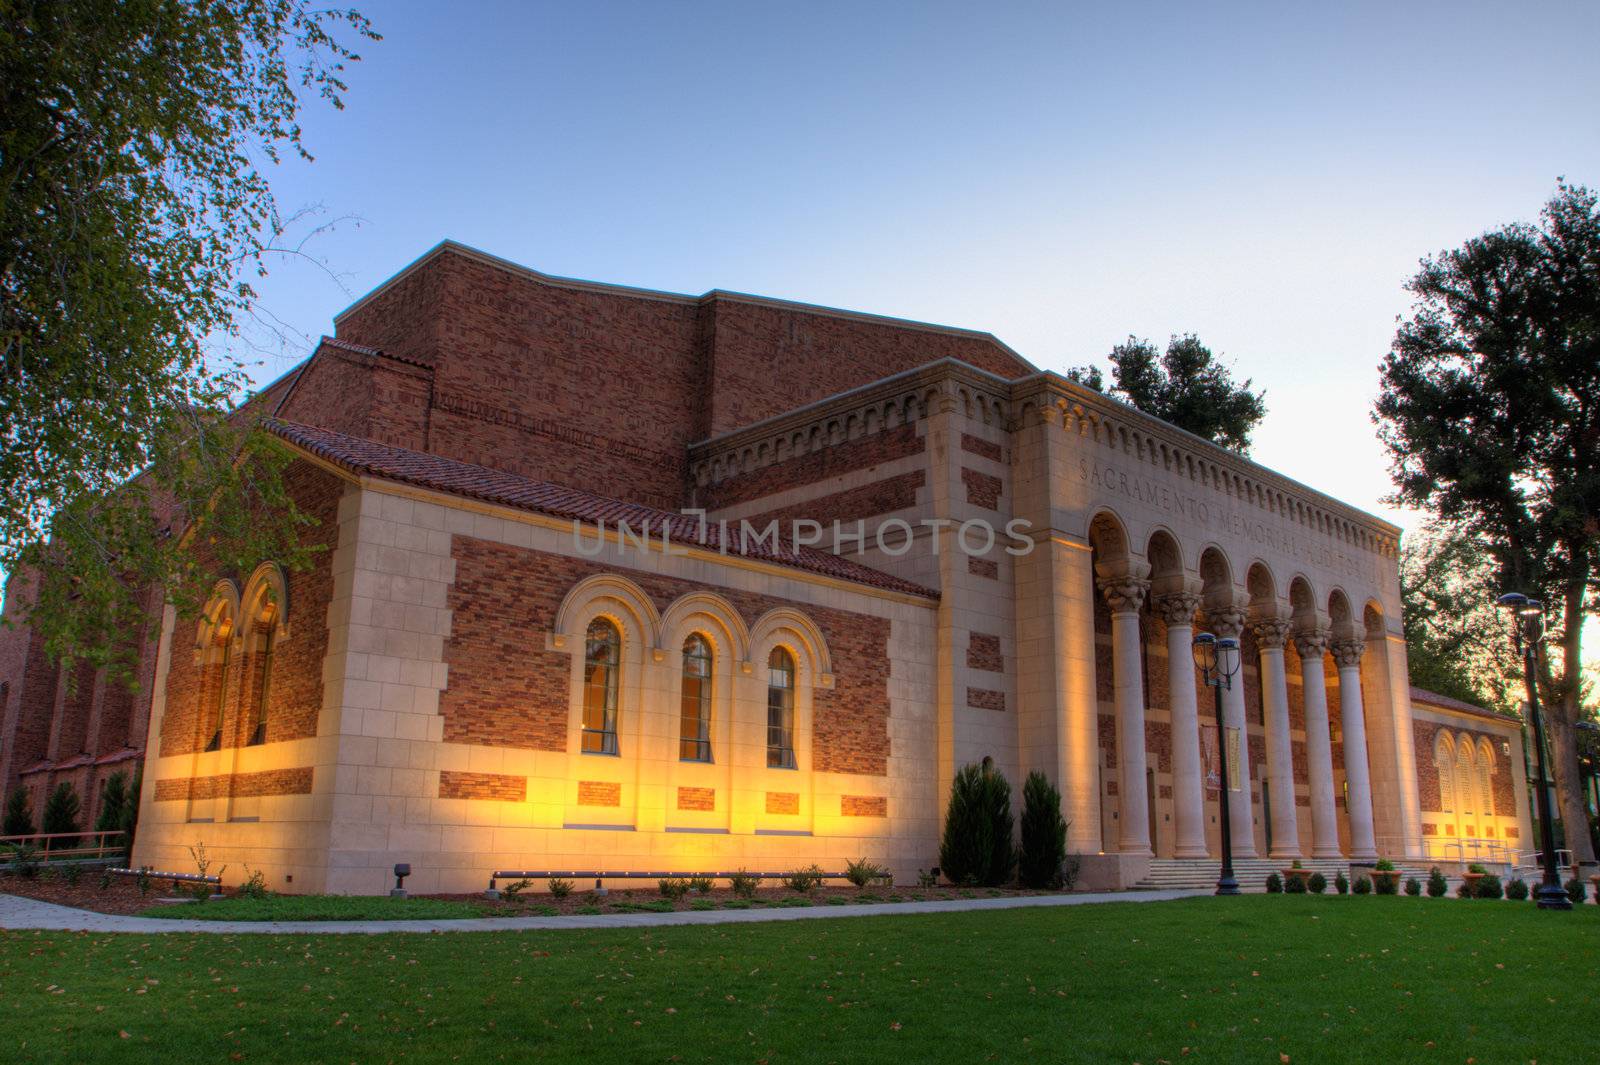 Sunrise shot with high dynamic range photography a corner of the Sacramento Memorial Auditorium